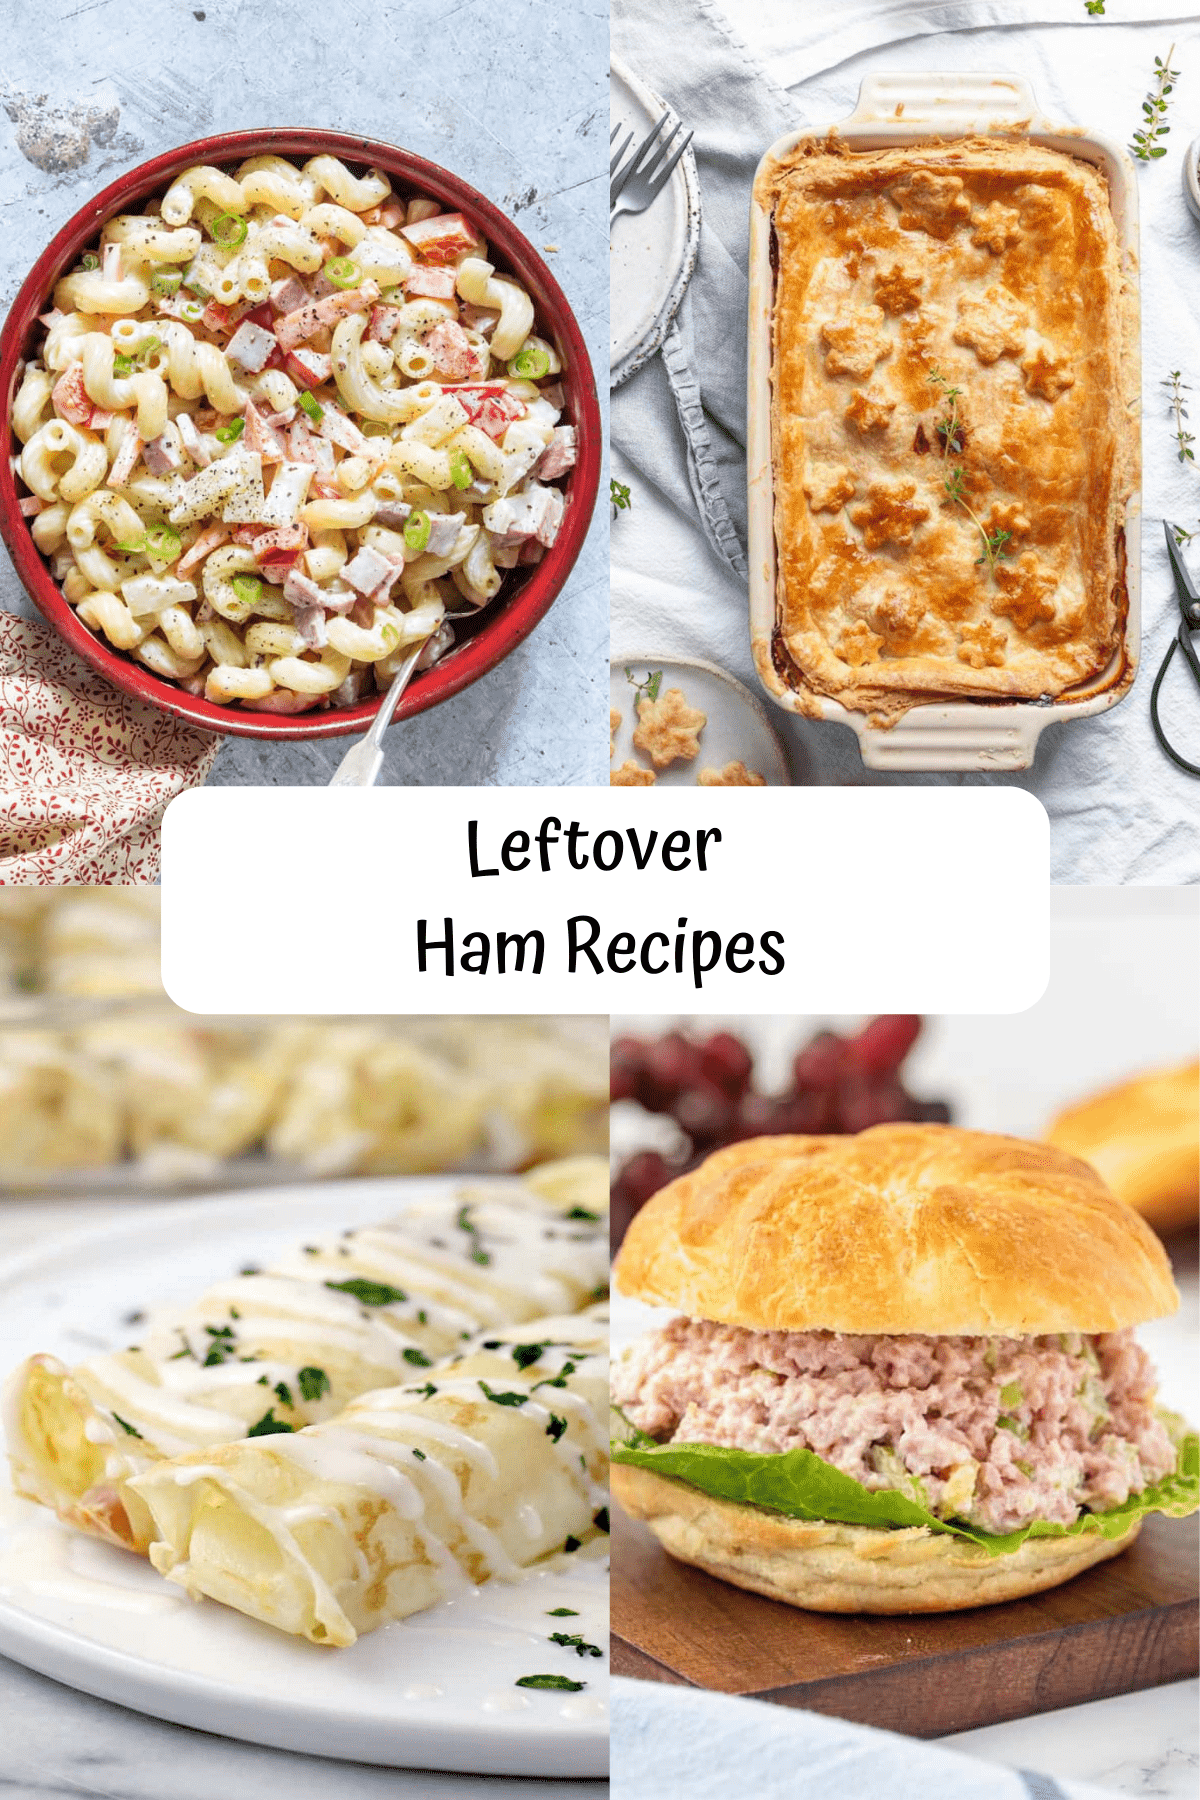 4 recipe images for macaroni salad, ham pot pie, ham crepes, and ham salad sandwich.